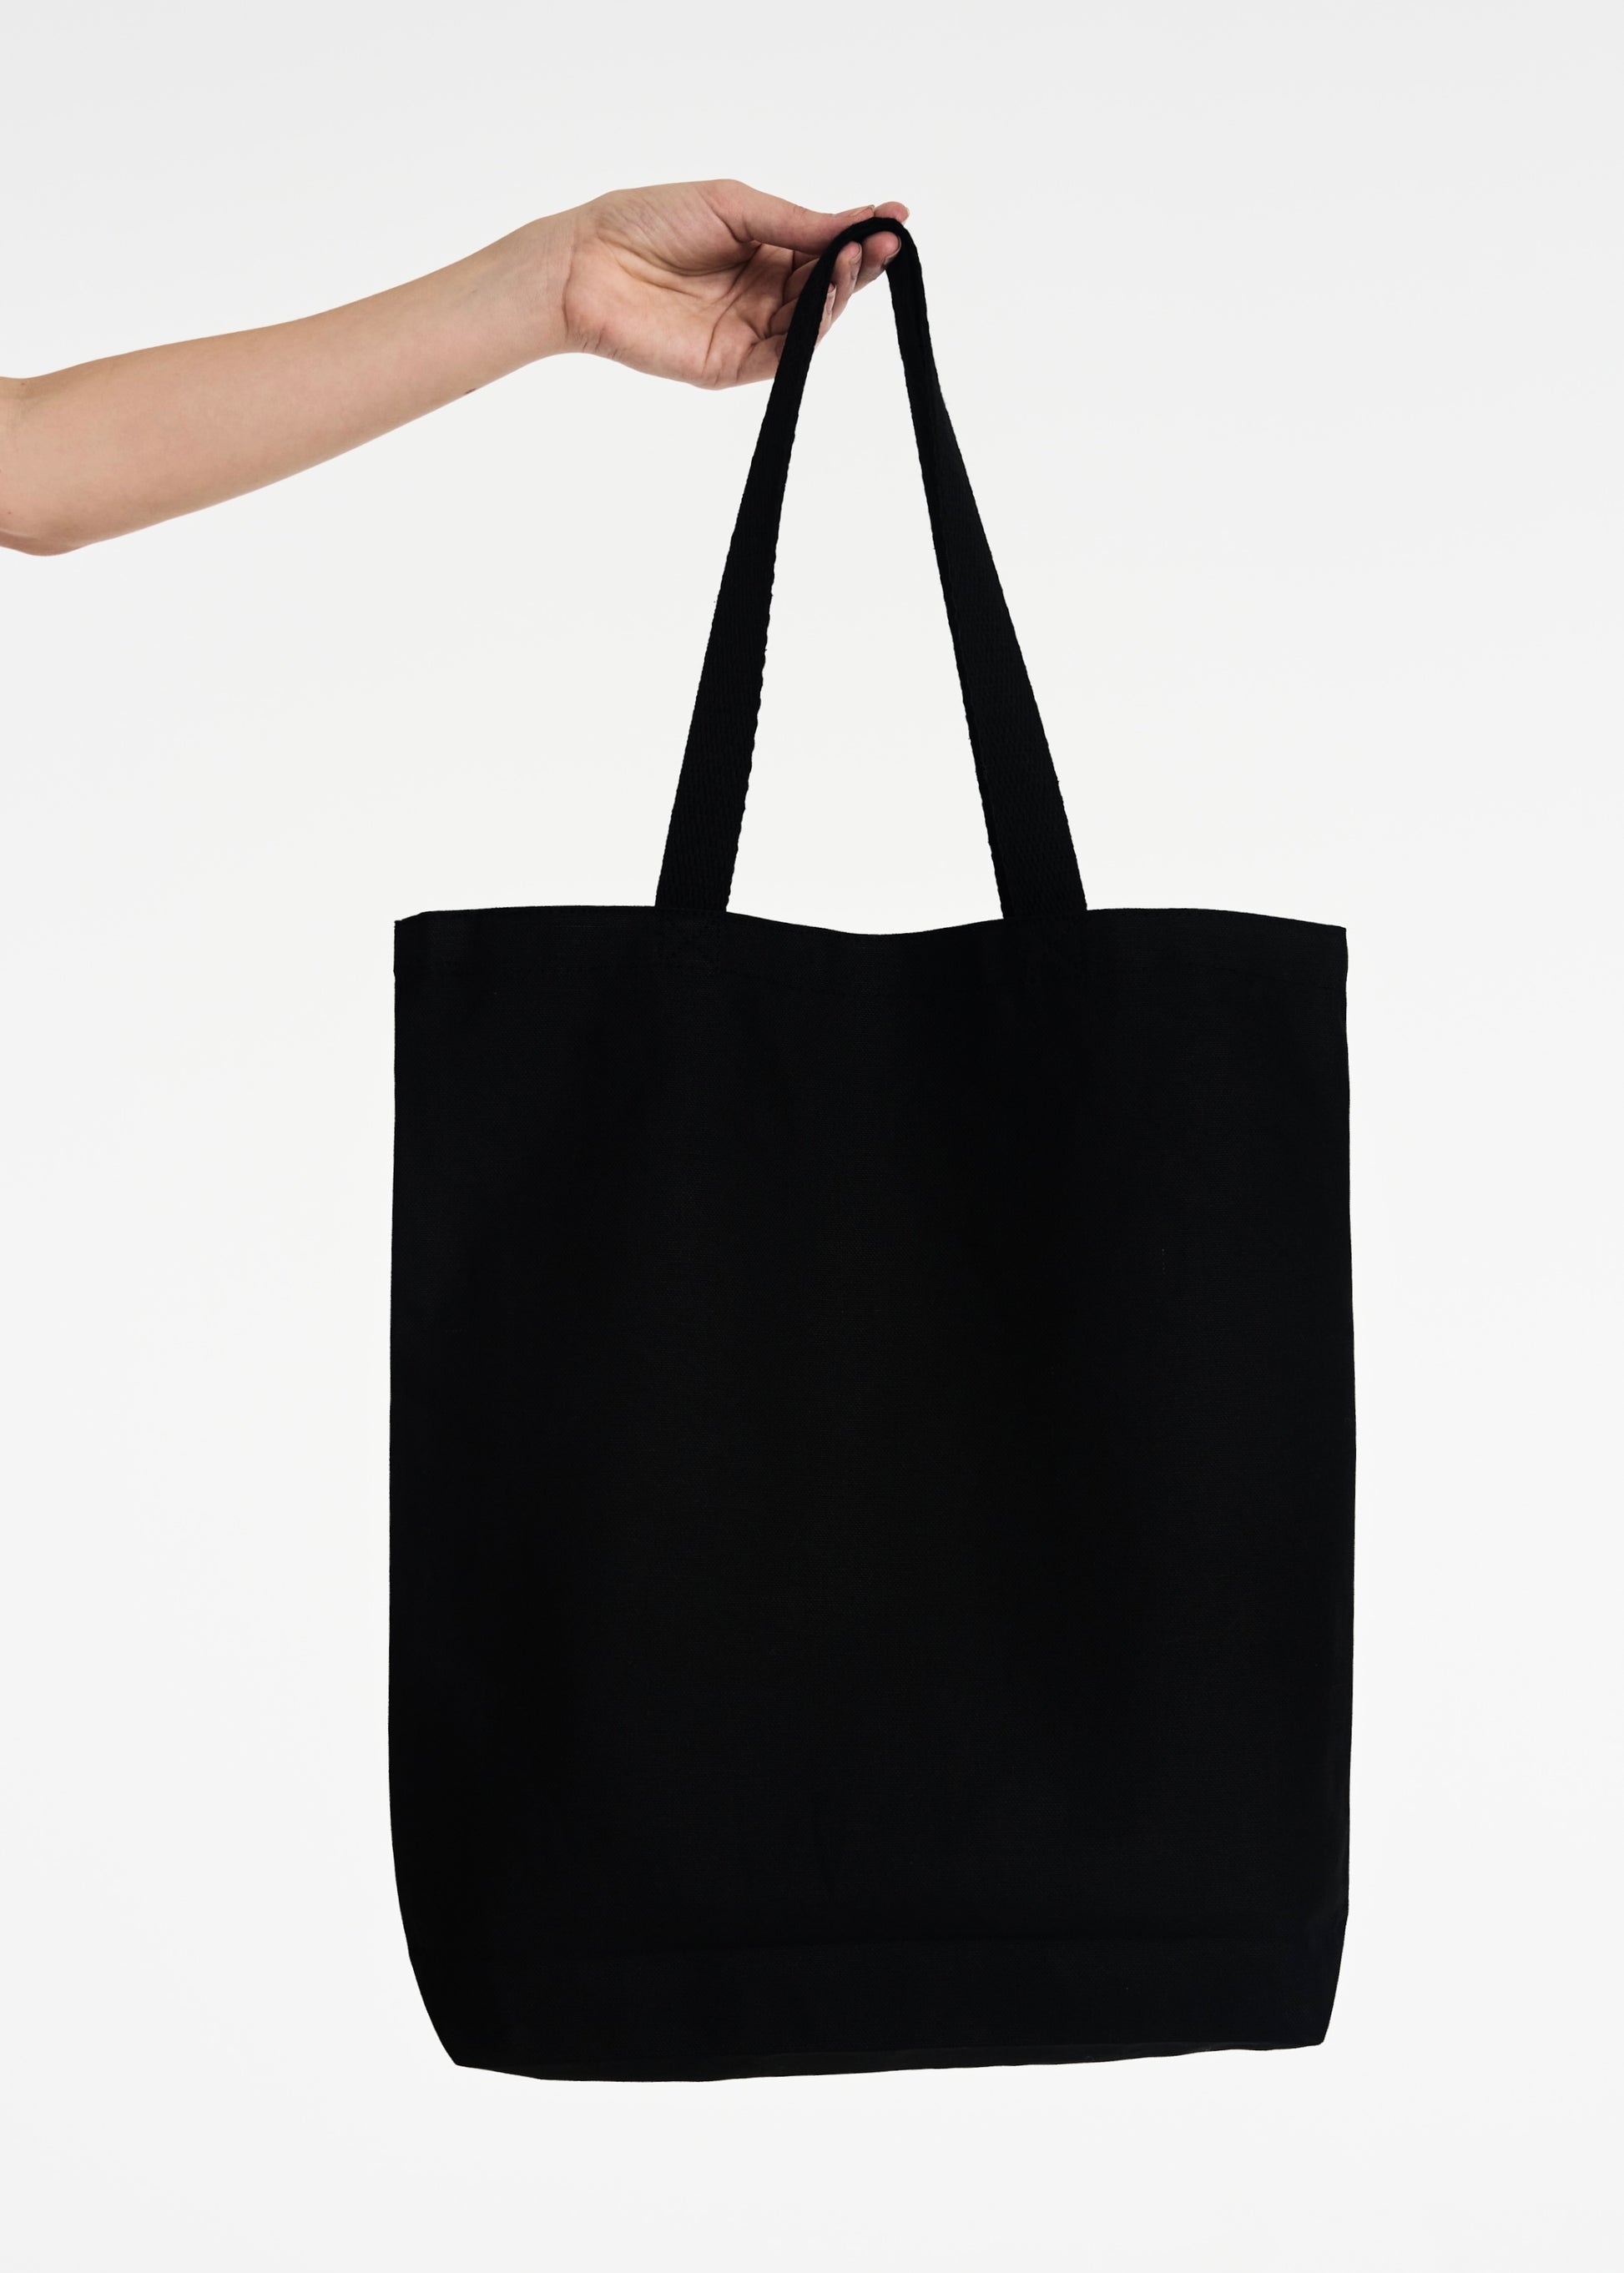 back of plain black tote bag